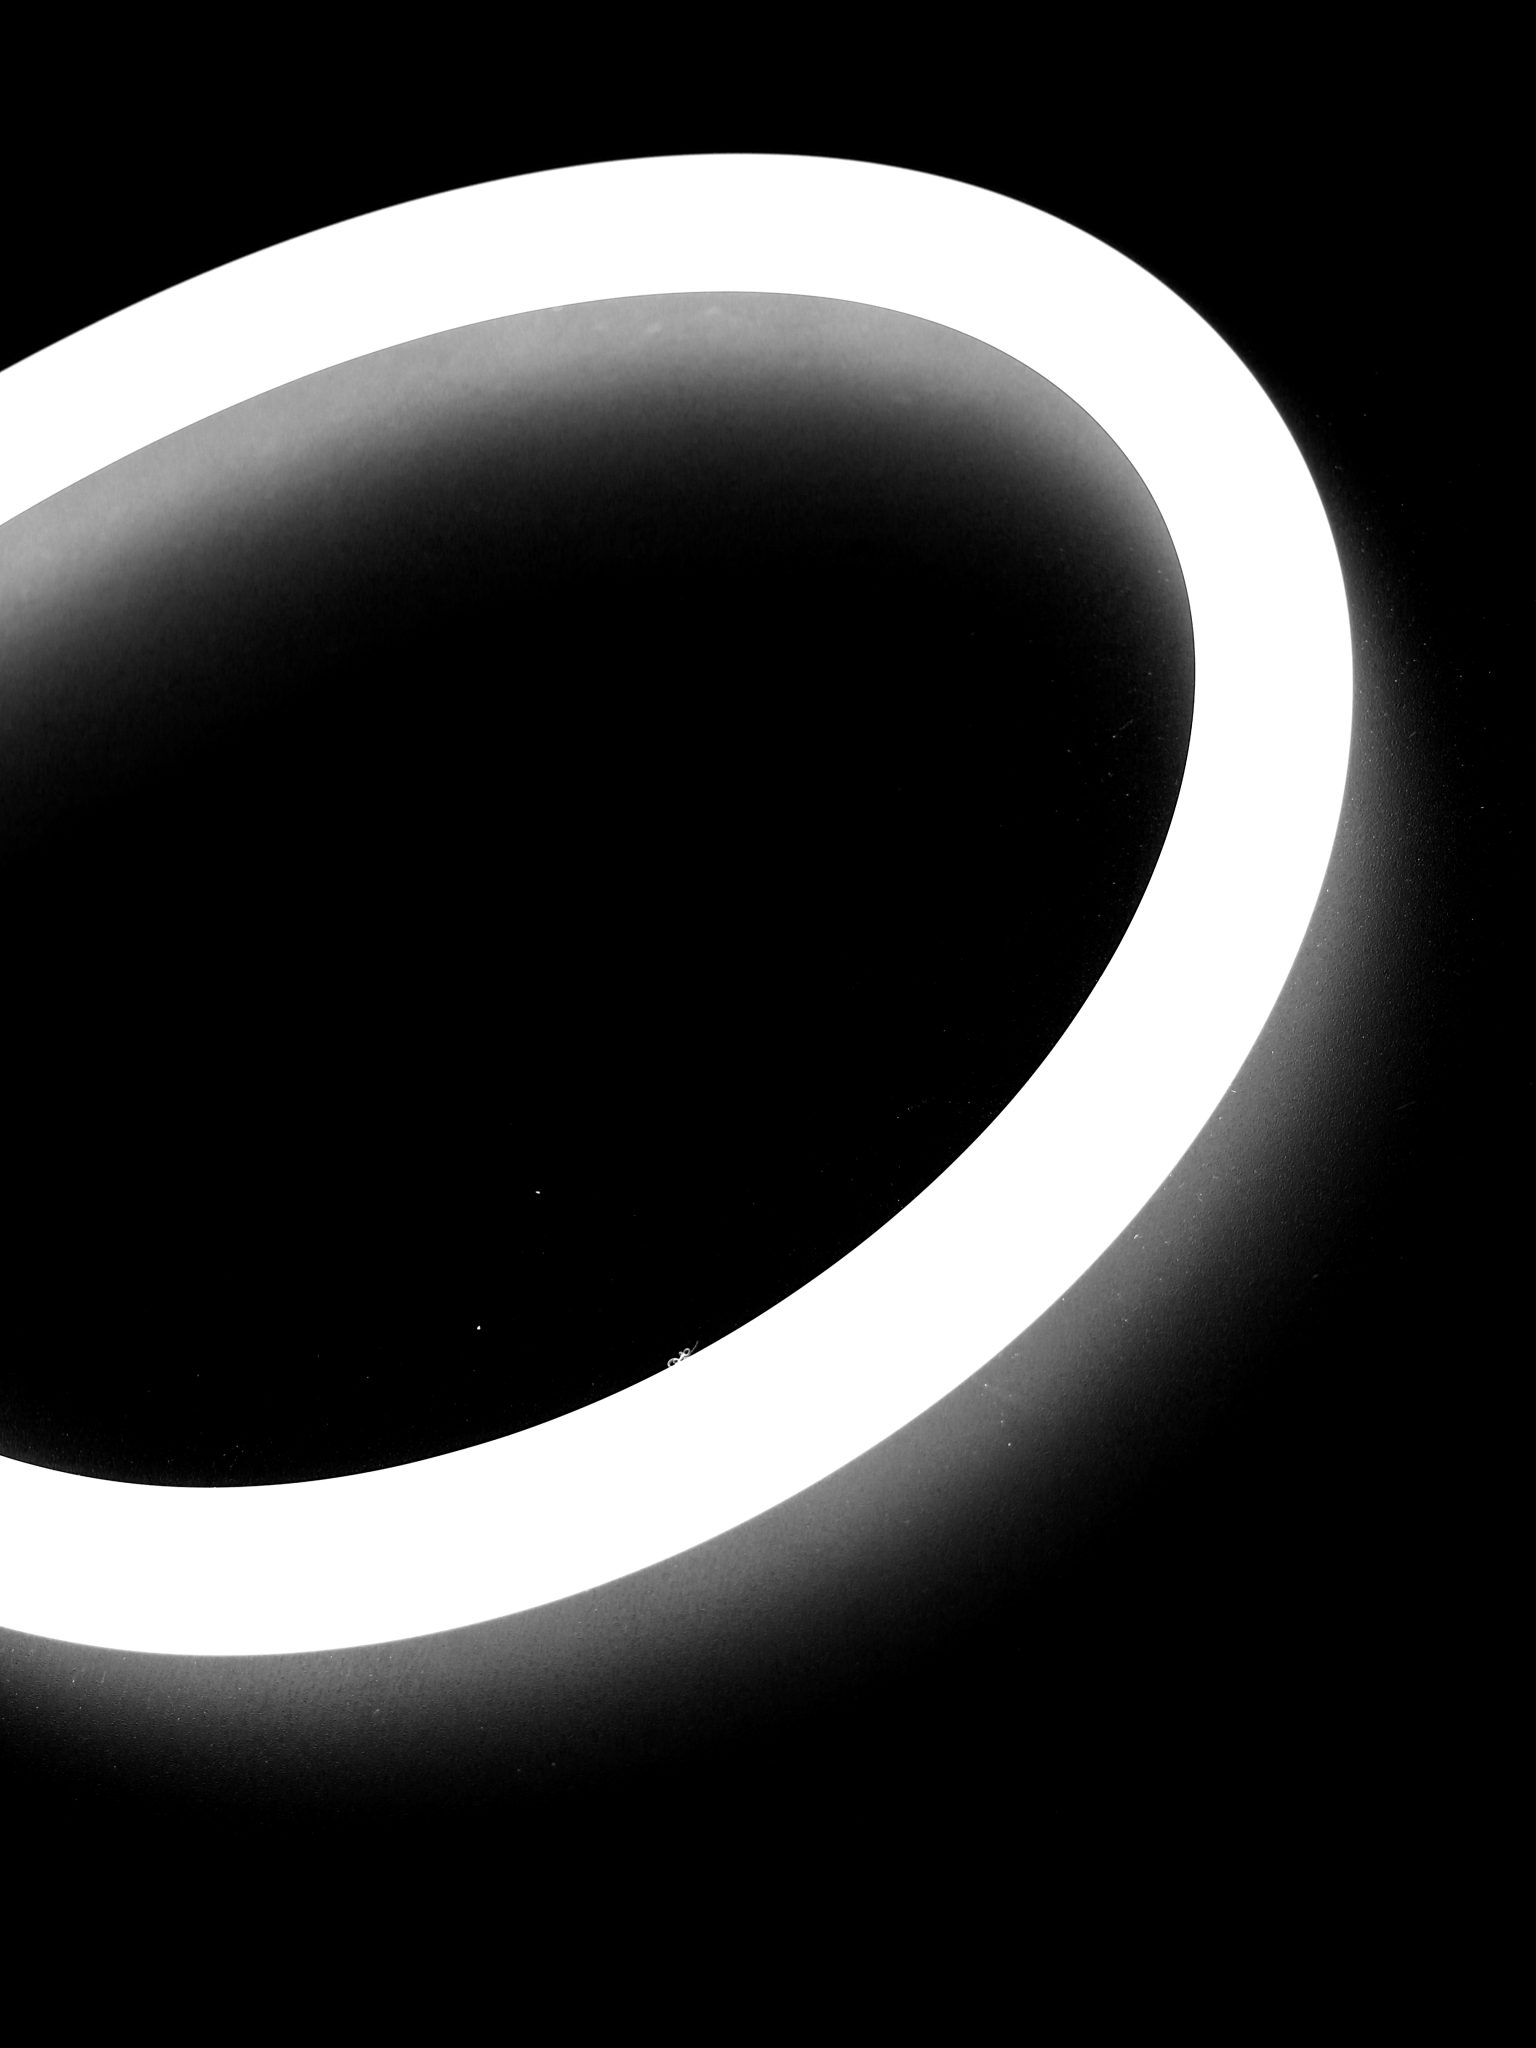 🔥 Ring Light Photo Editing Background Download | CBEditz